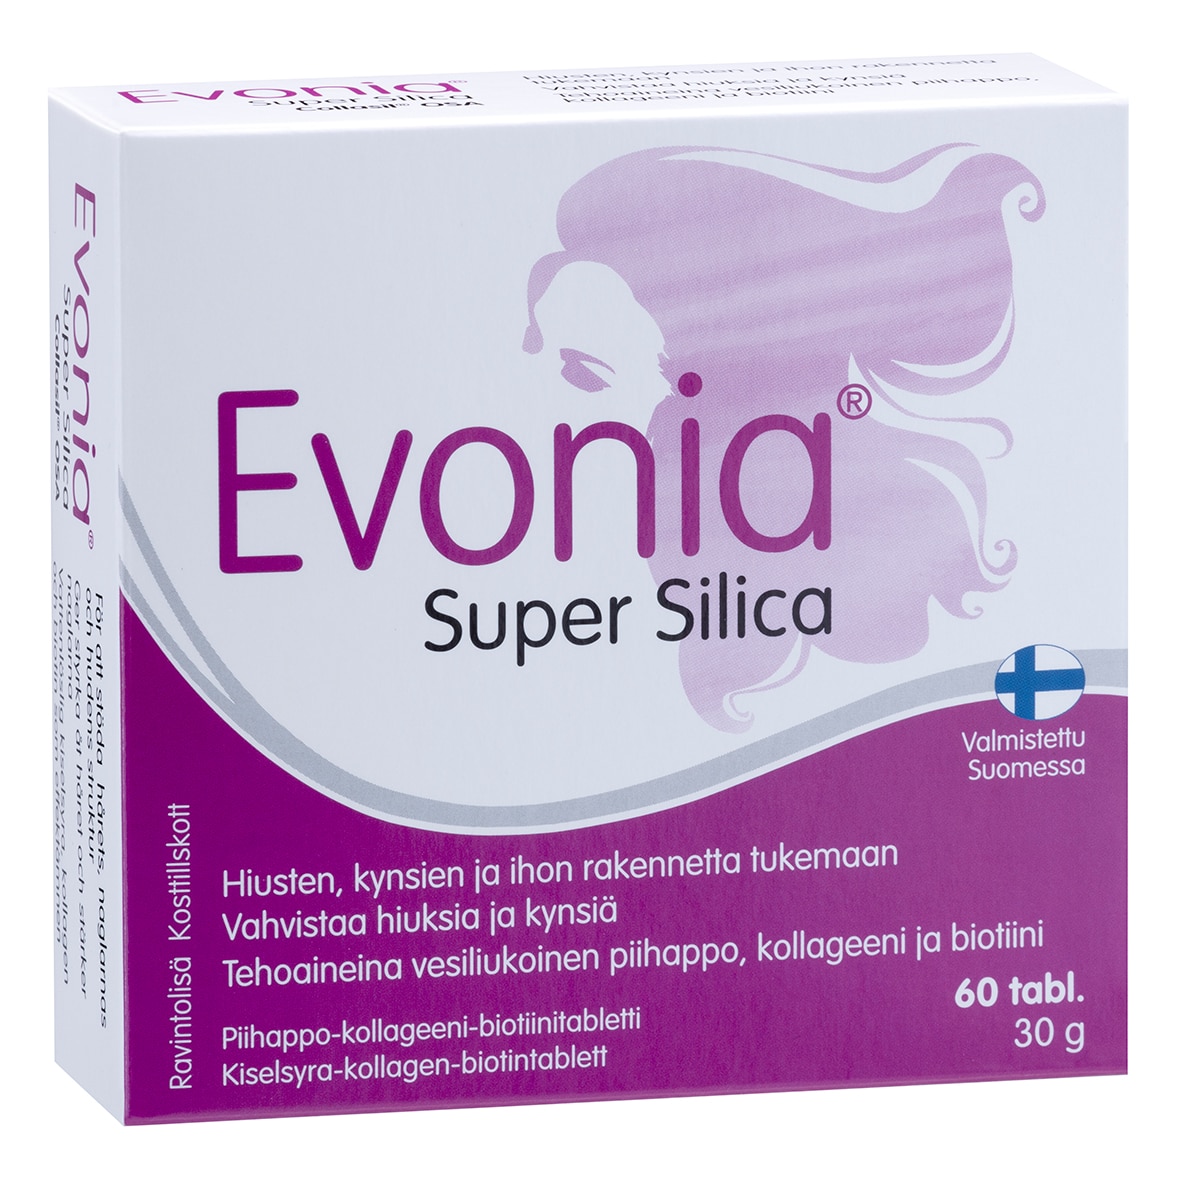 Evonia Super Silica 60 tab